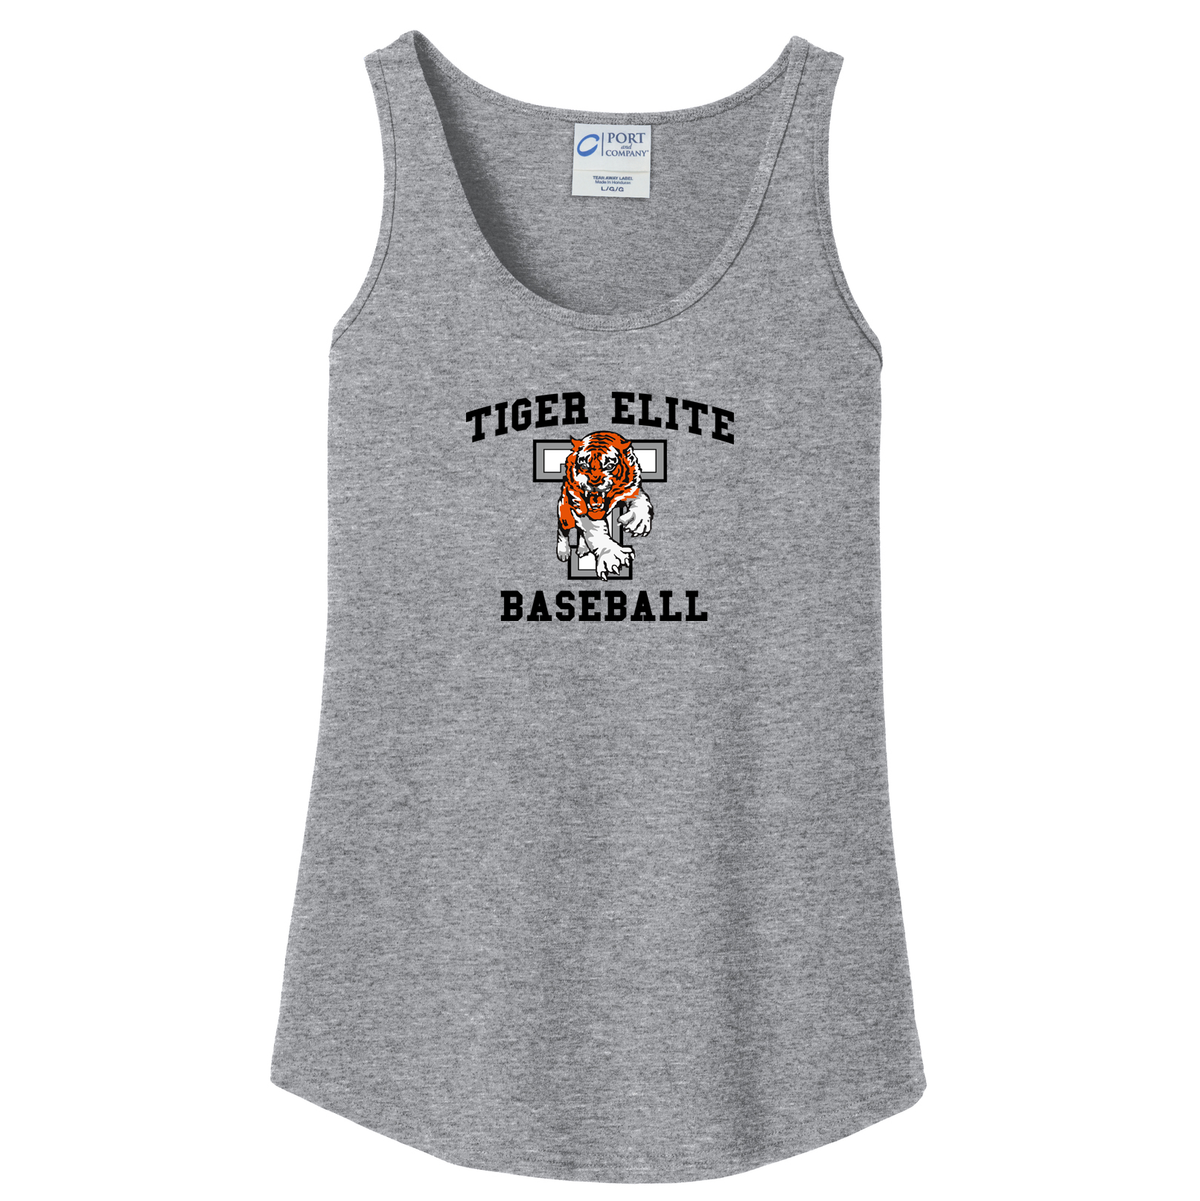 Tiger Elite Baseball Women's Tank Top